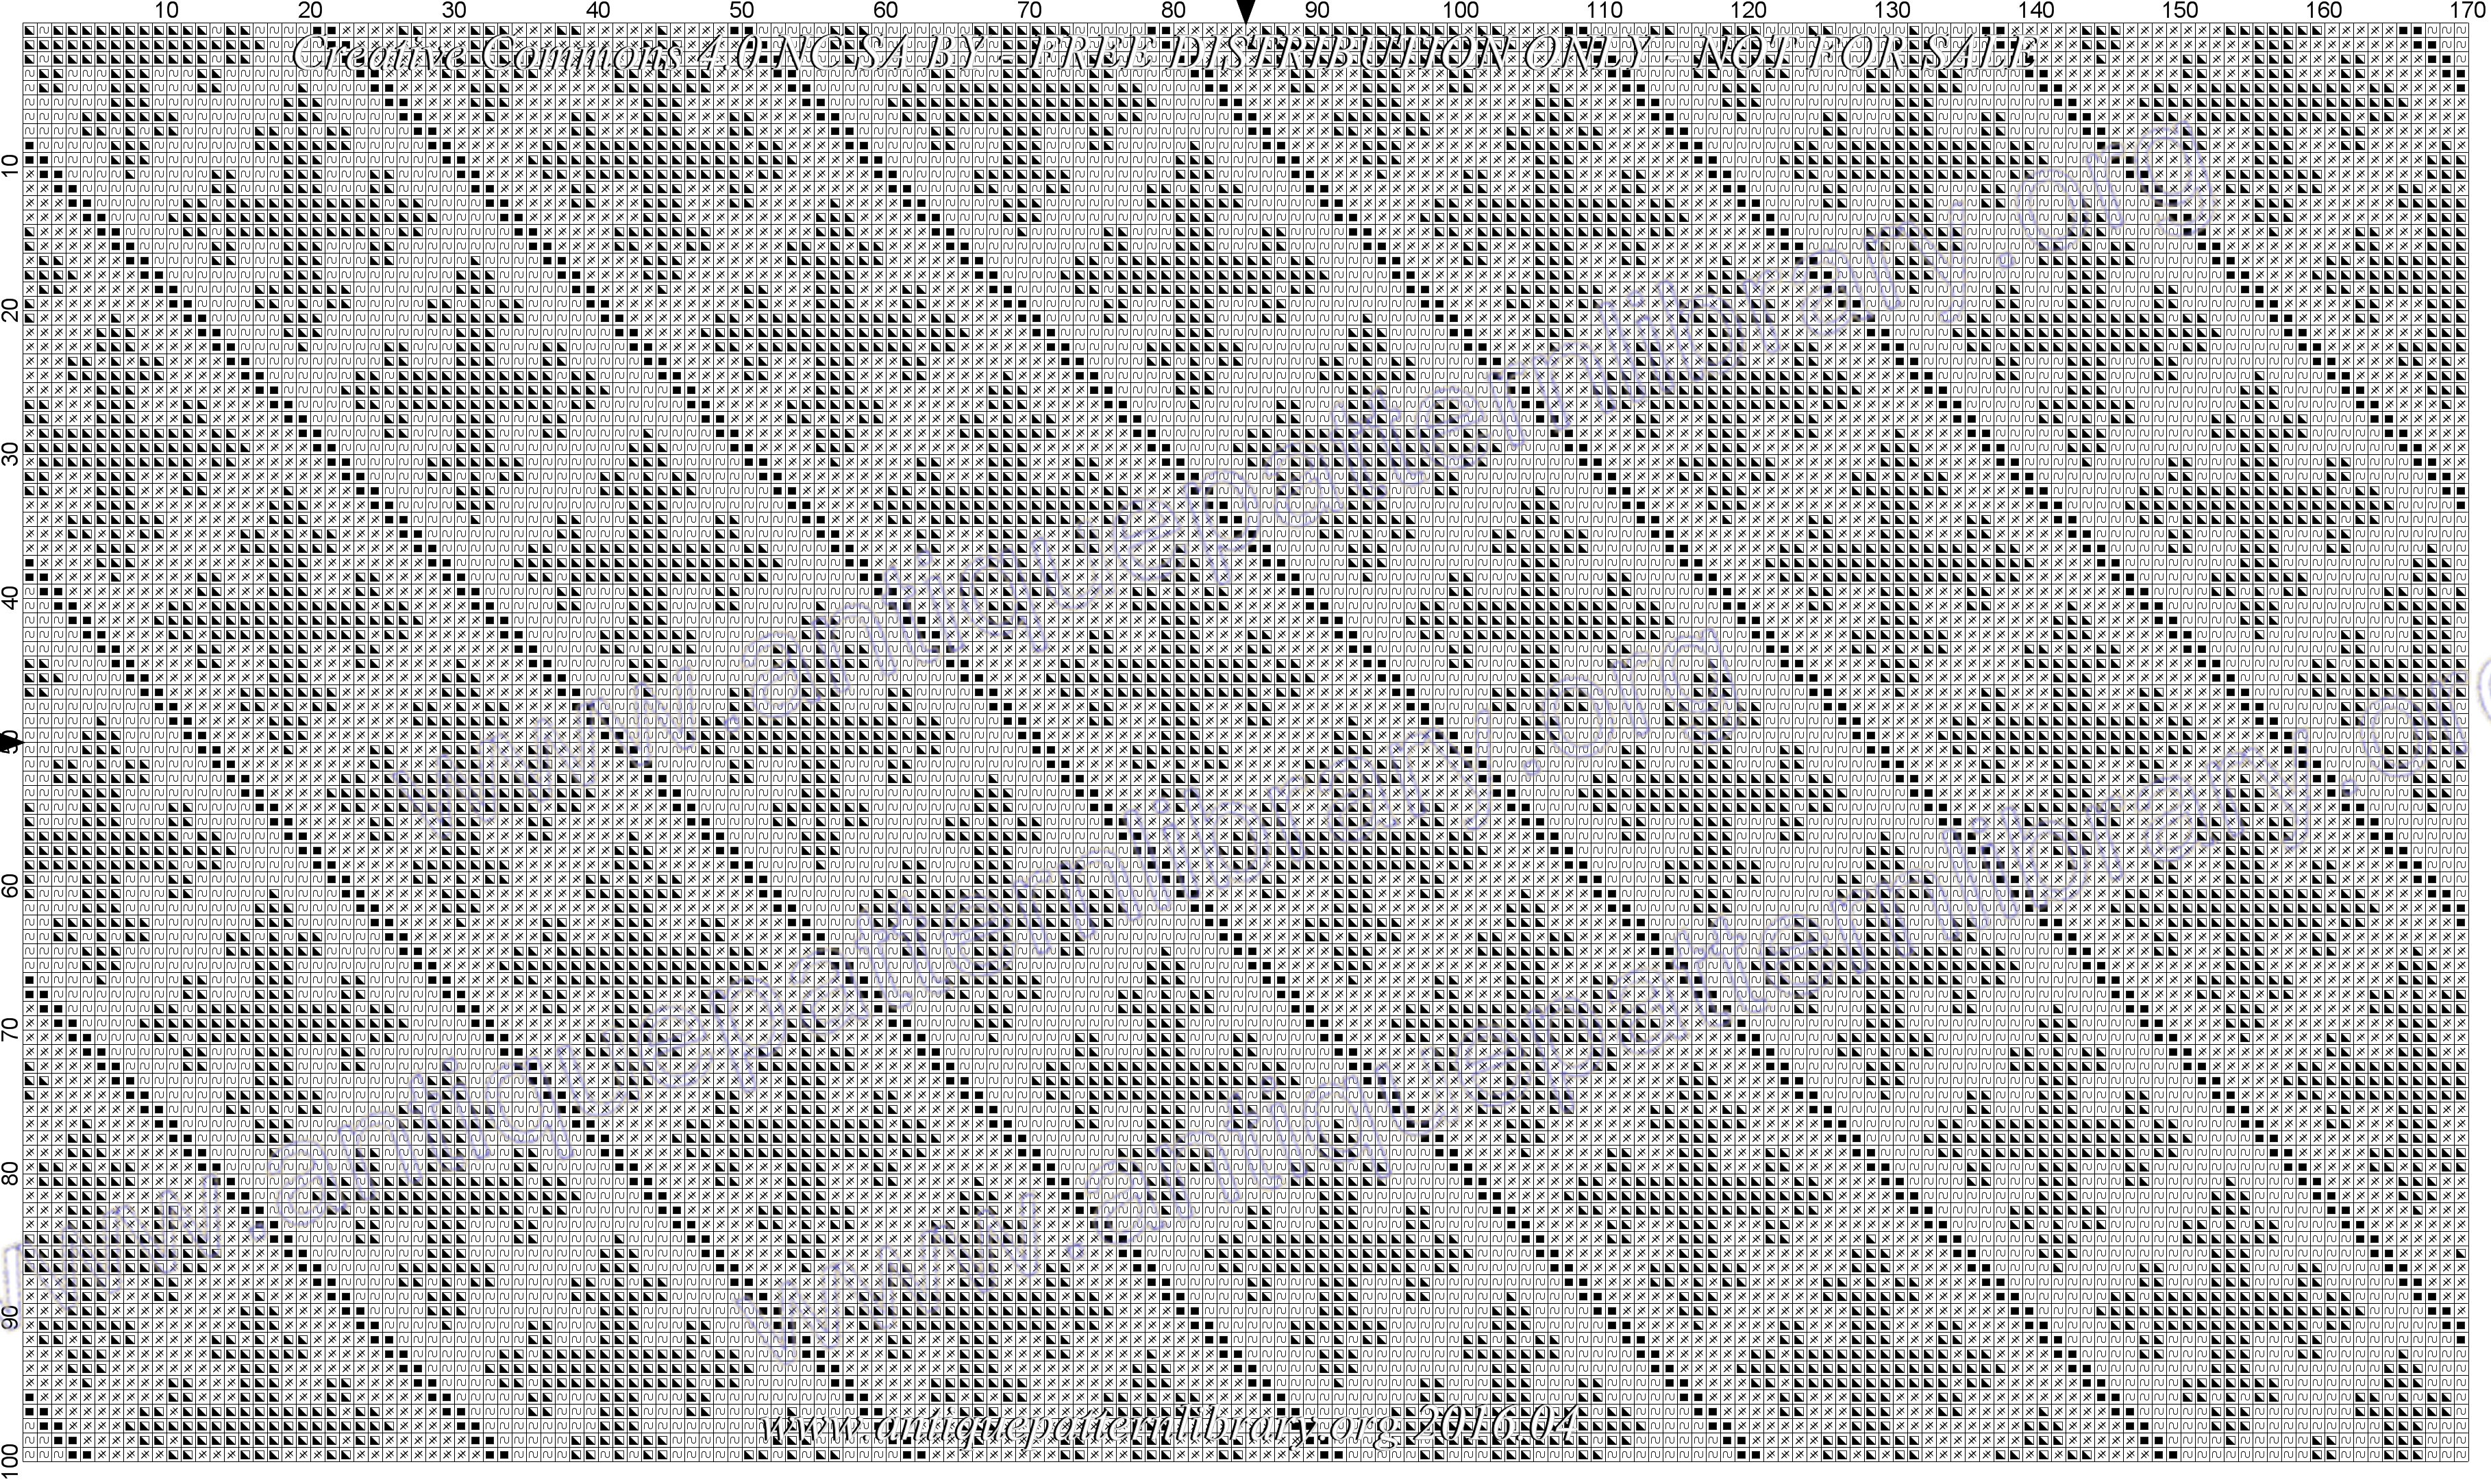 F-PT008 Heraldic cross pattern